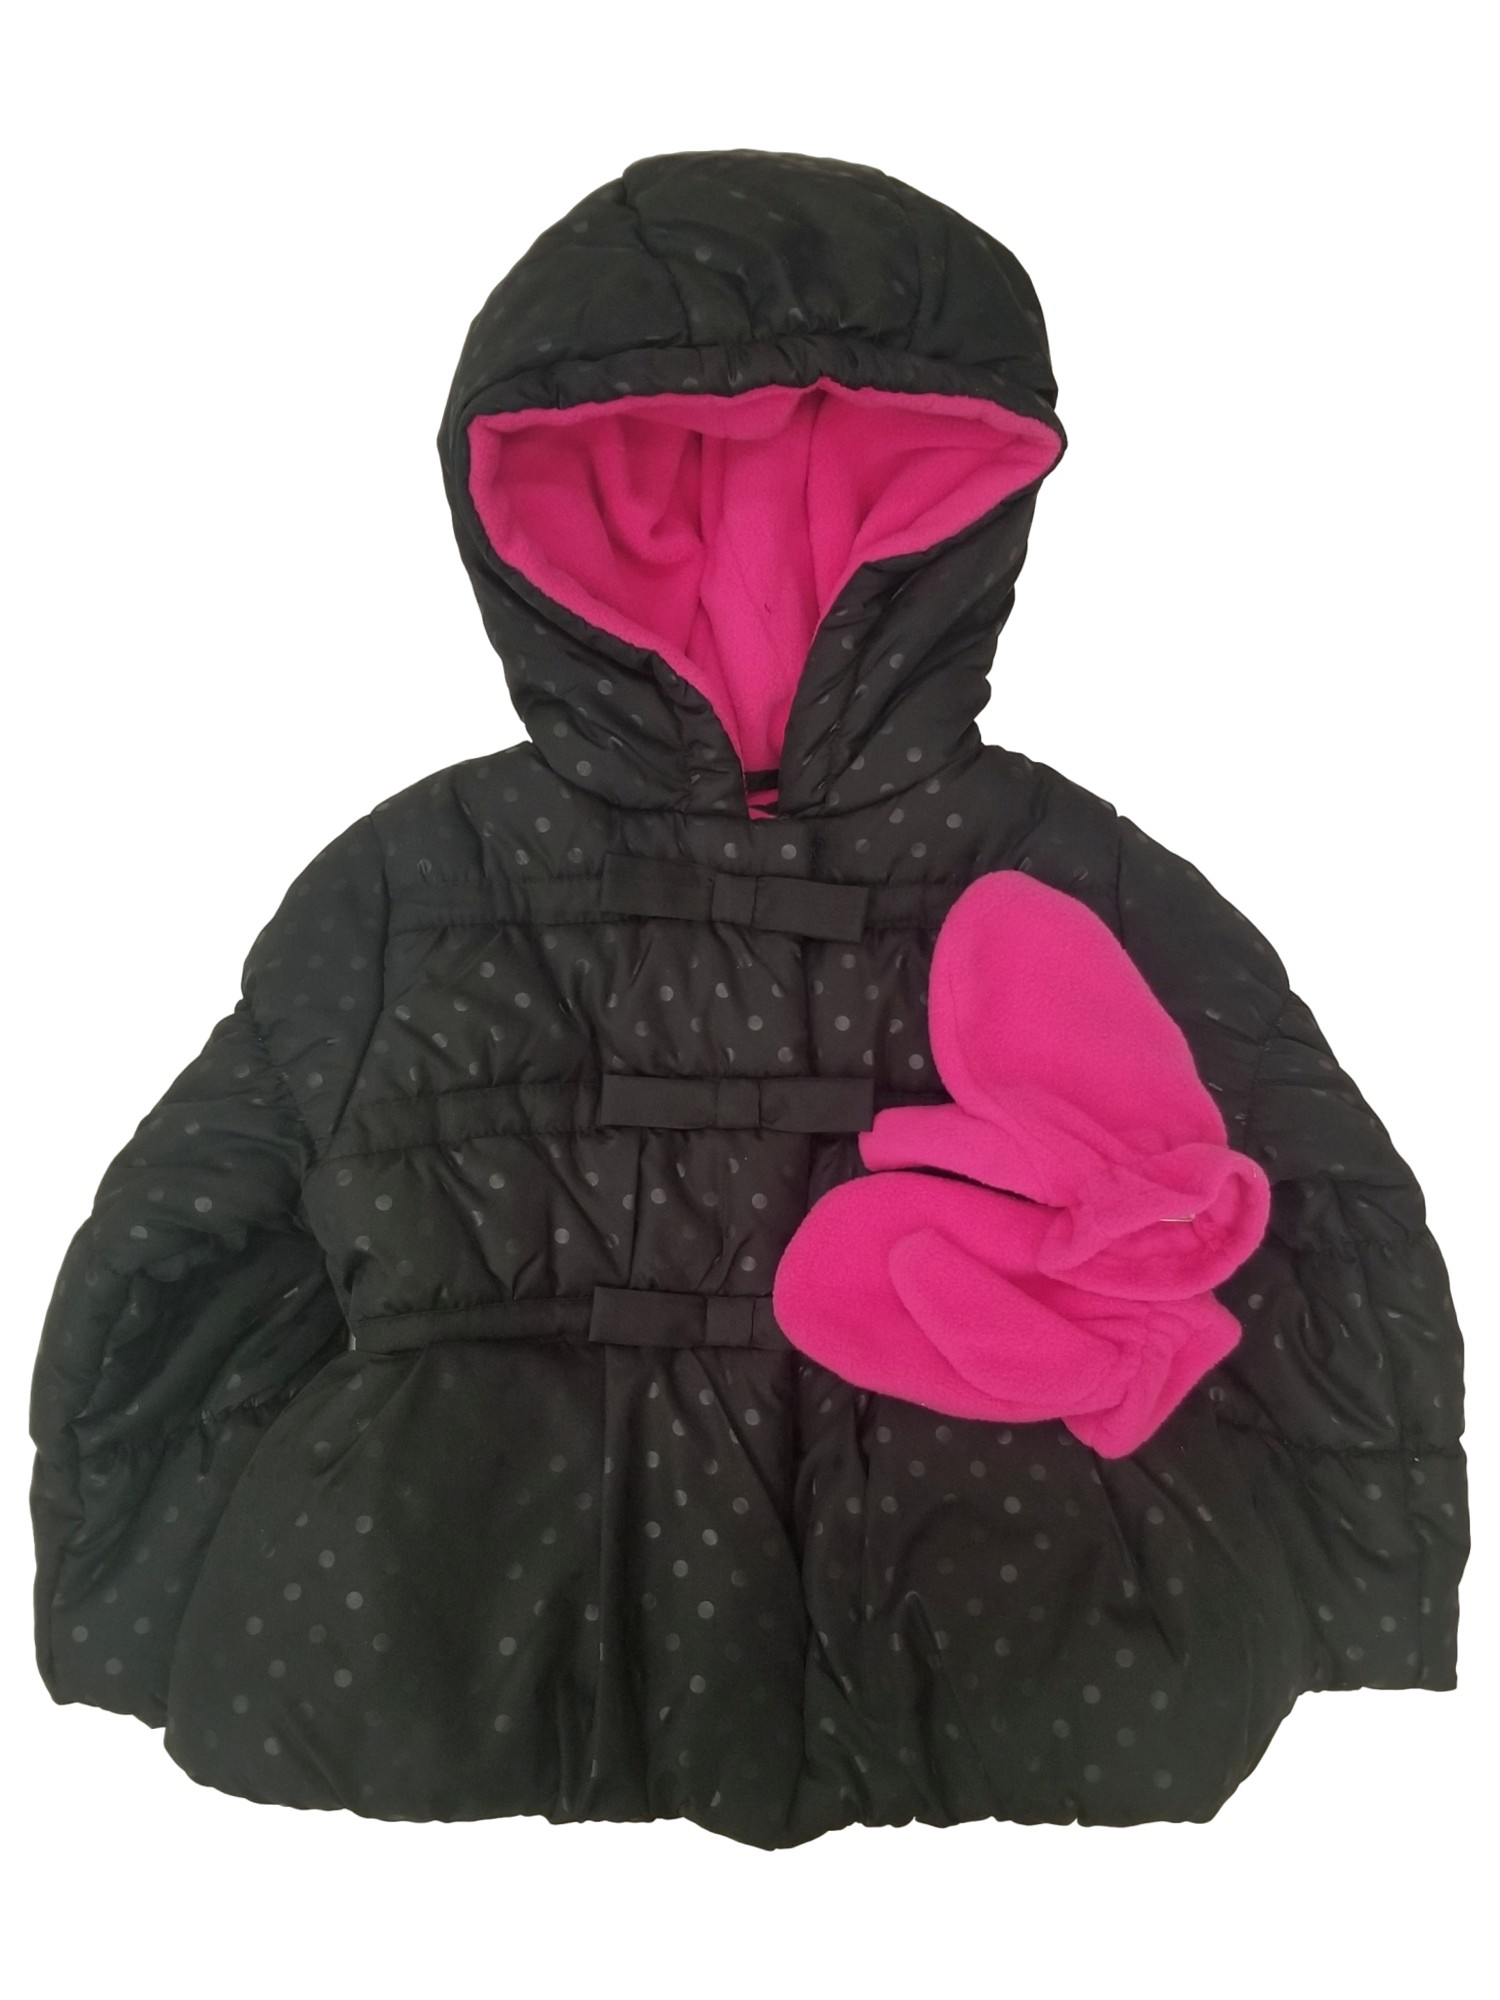 Rothschild Infant Girls Black Bow Zip Up  Snow Coat Baby Ski Jacket Pink Mittens 18m